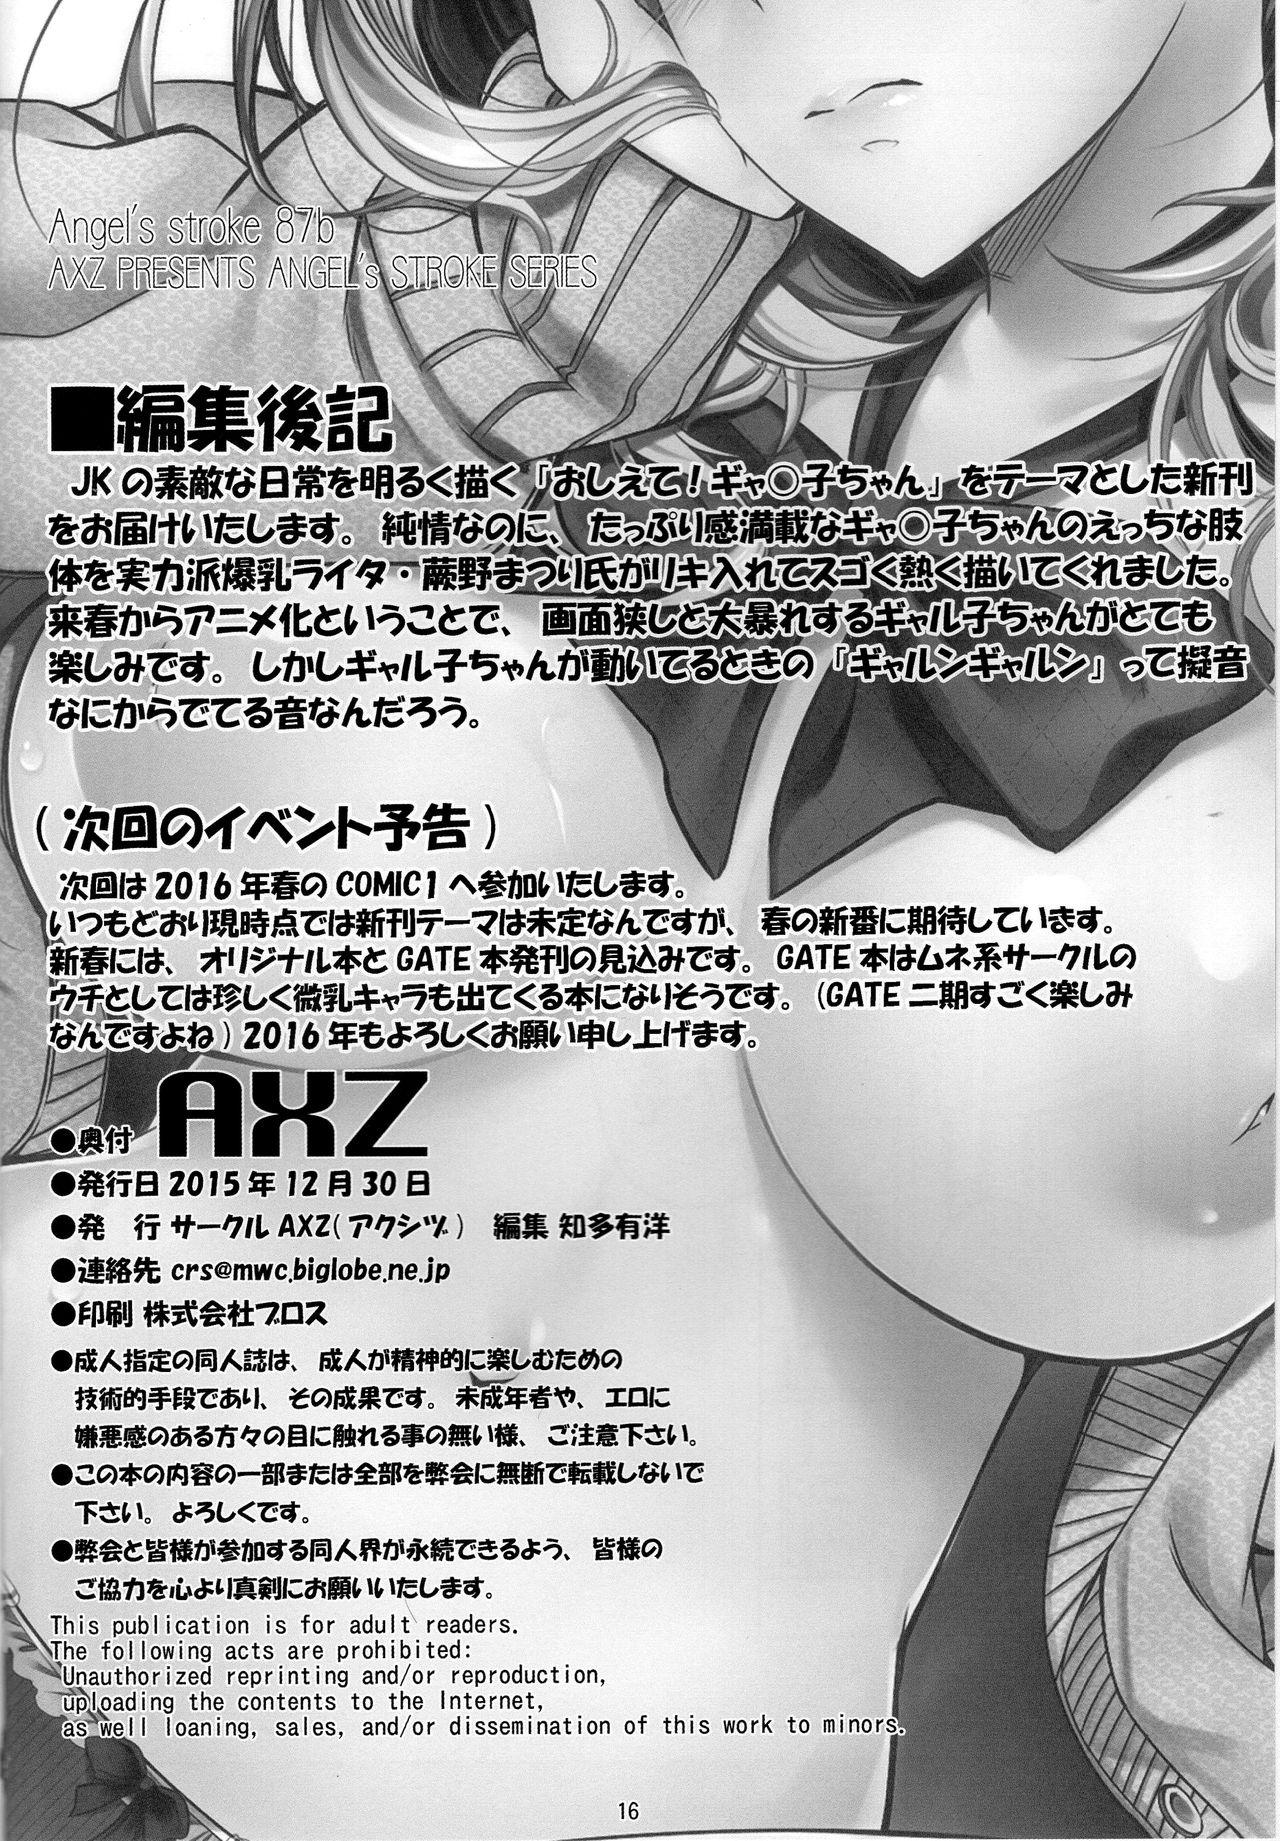 Mamadas Angel's Stroke 87b Galko-chan 0.02!! - Oshiete galko-chan Amiga - Page 18